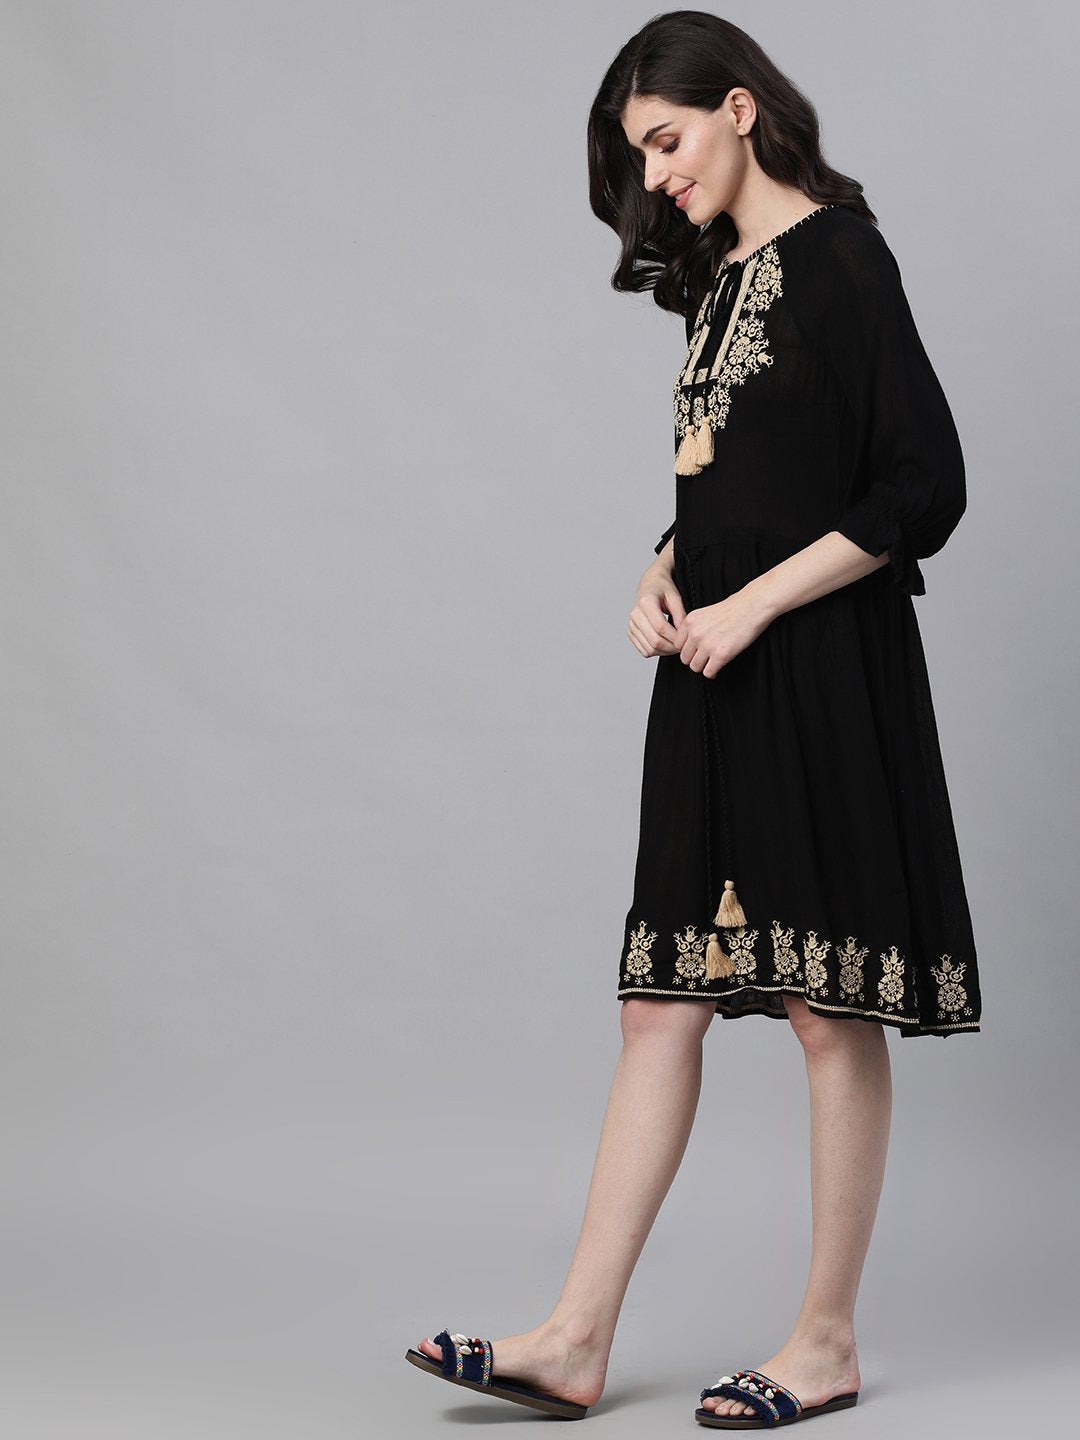 Ishin Women's Rayon Black Embroidered A-Line Dress